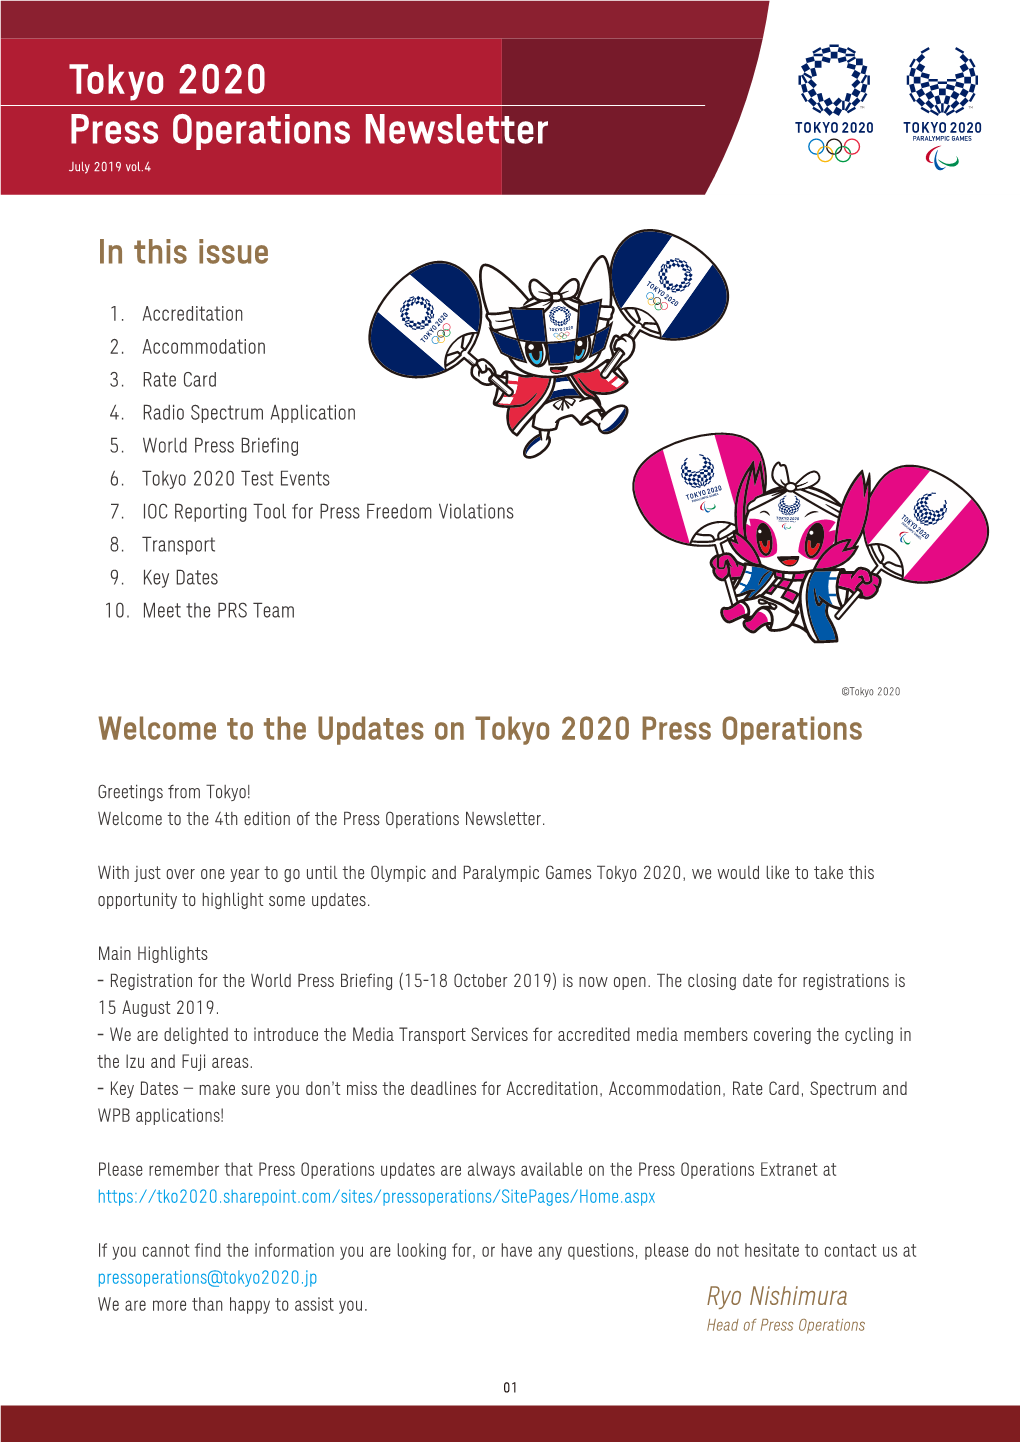 Tokyo 2020 Press Operations Newsletter July 2019 Vol.4